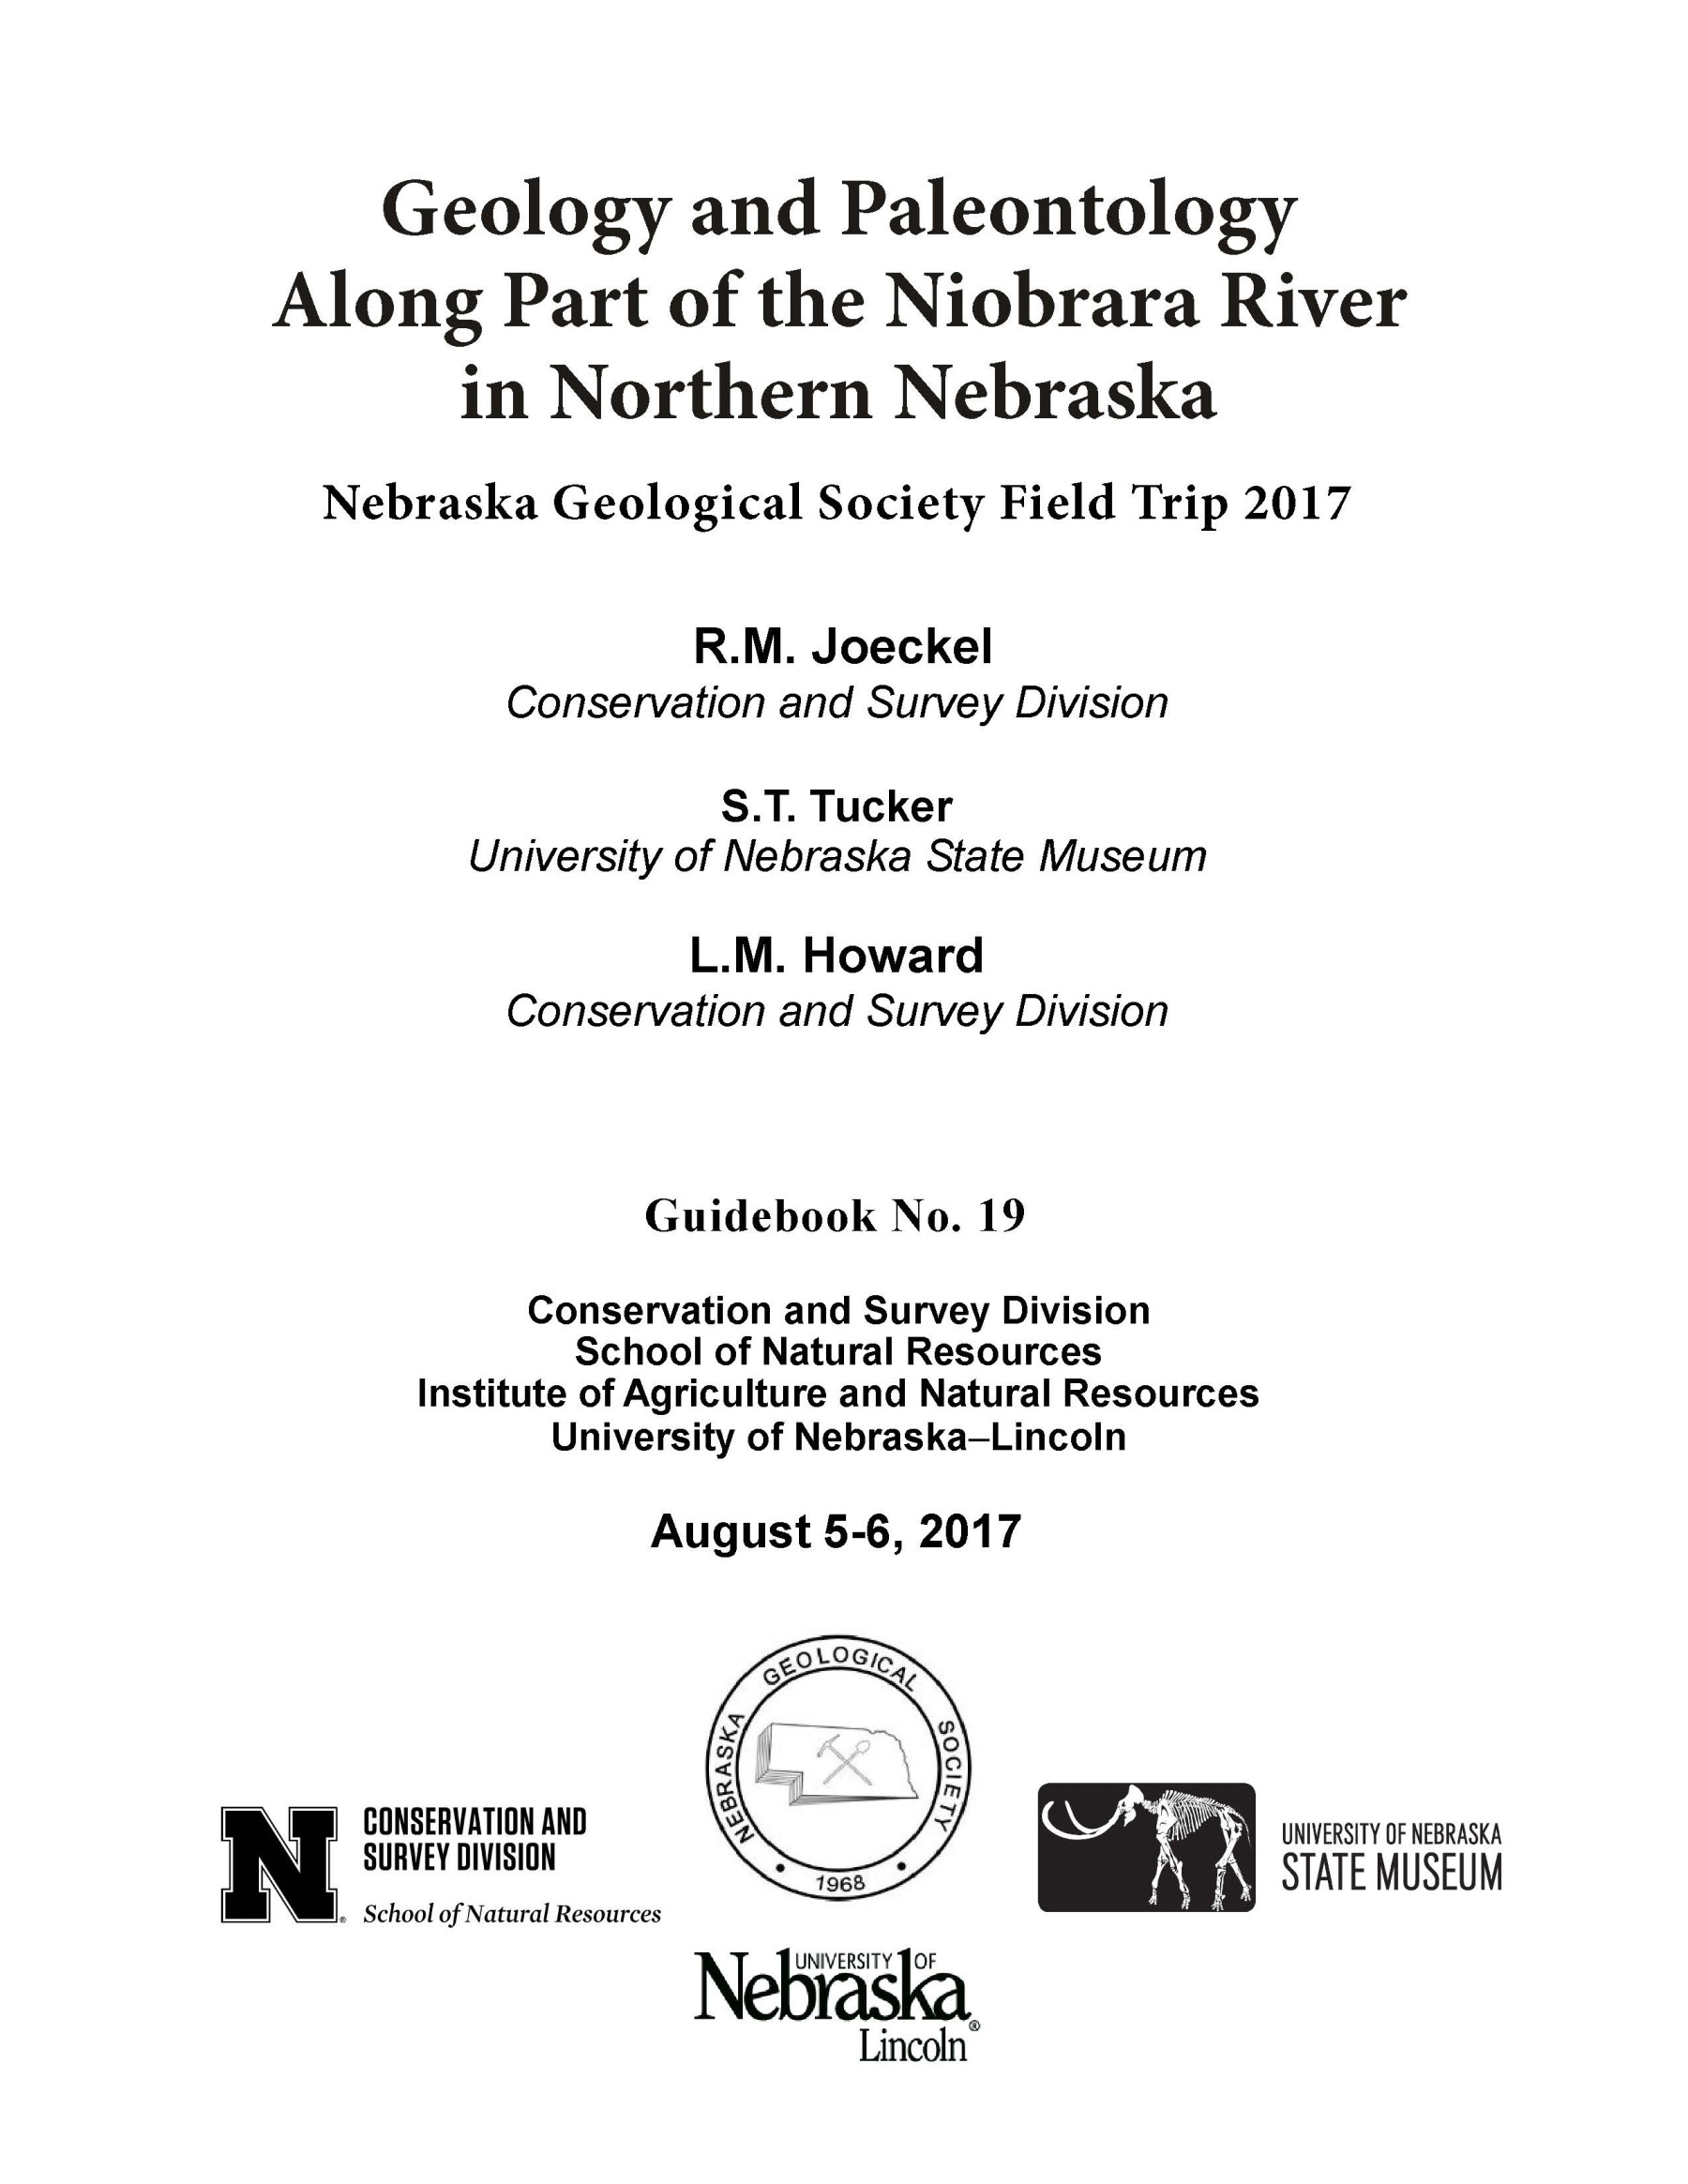 Geology and Paleontology Along Part of the Niobrara River in Northern Nebraska (GB-19)